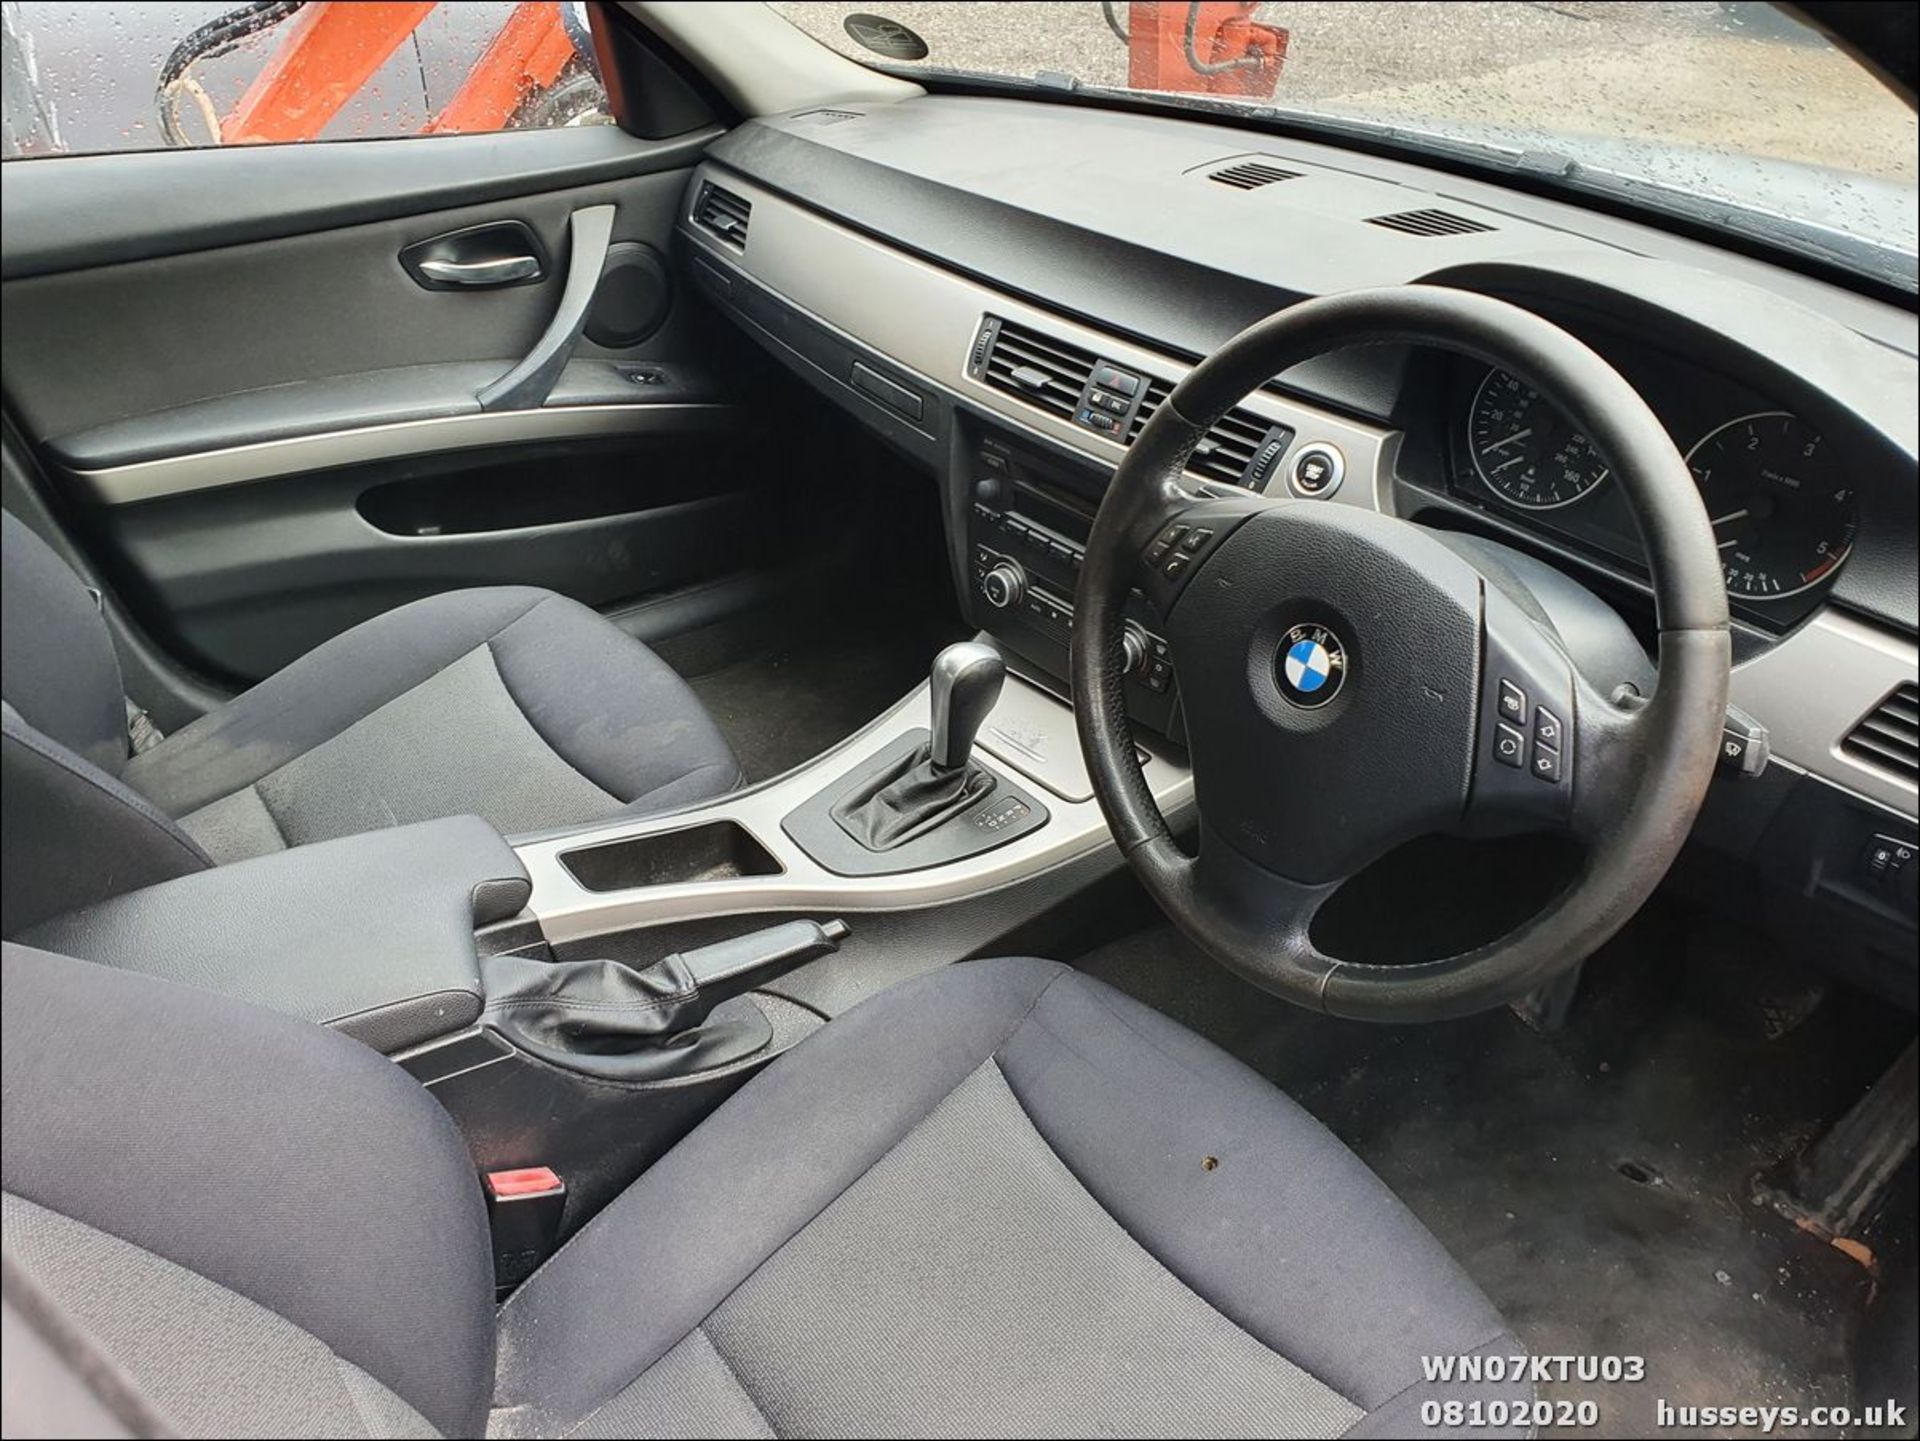 07/07 BMW 320D SE AUTO 4dr Saloon (Silver, 213k) - Image 3 of 9